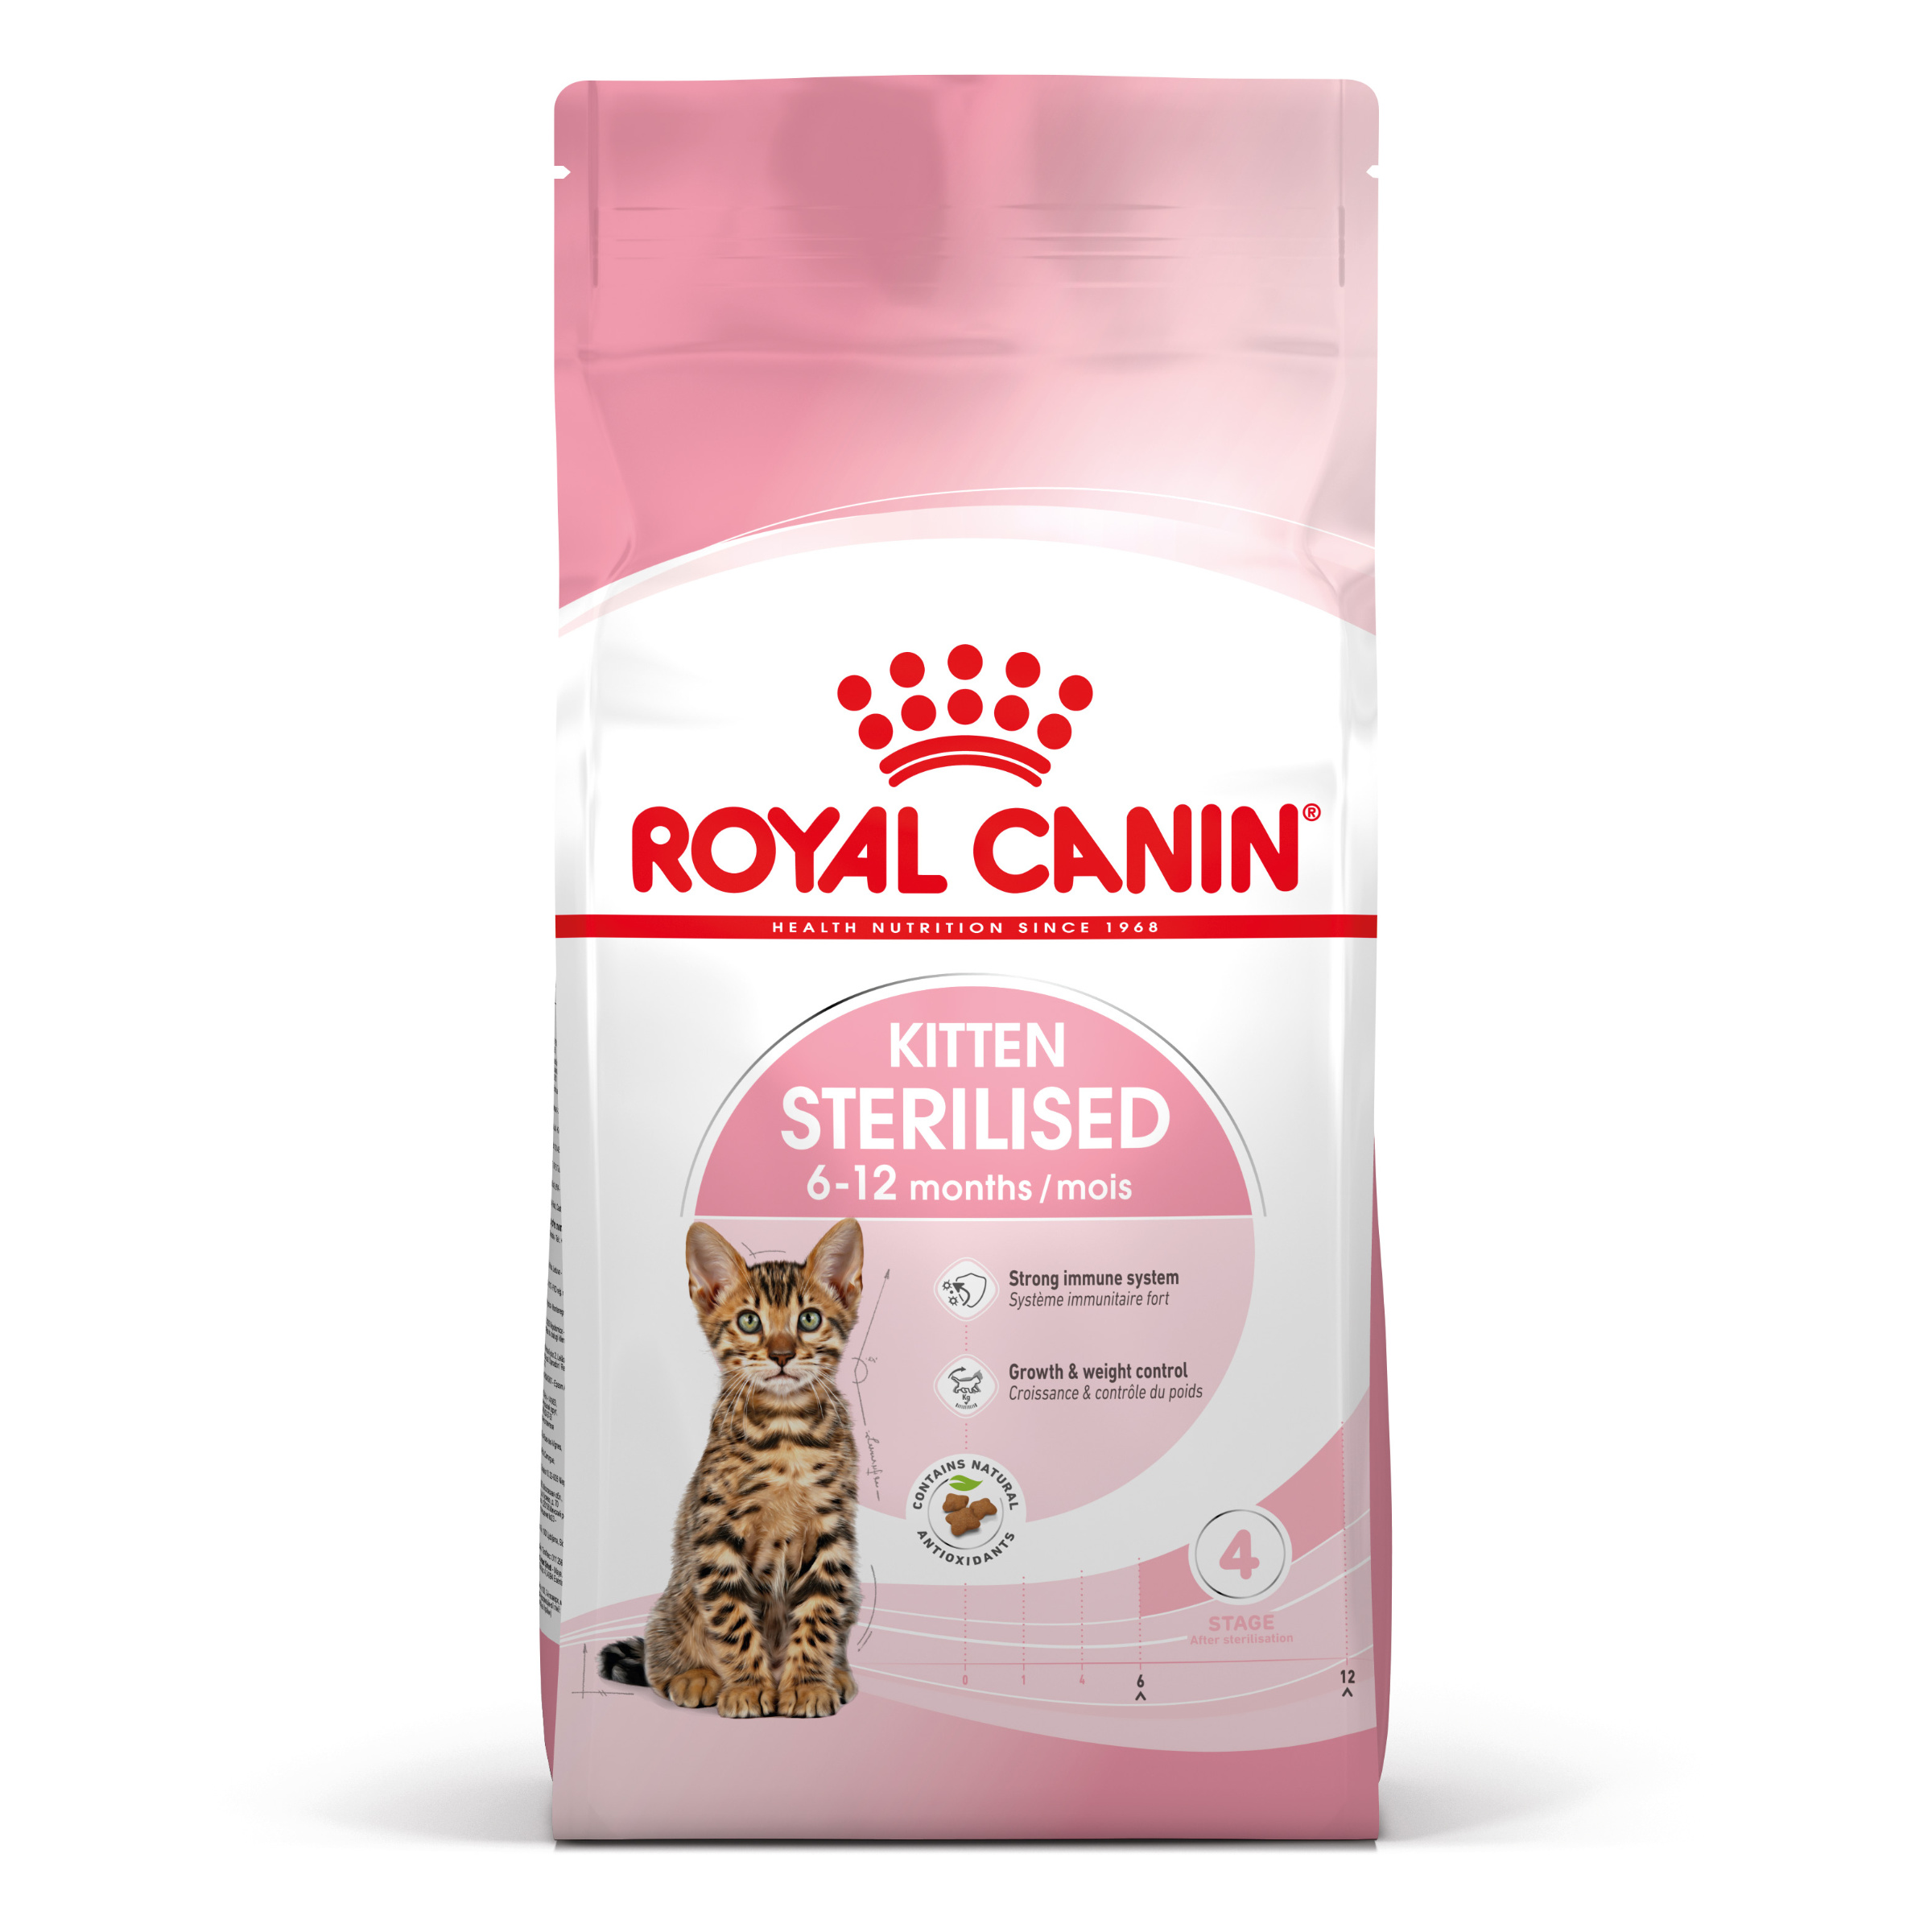 Royal Canin Kitten Sterilised - Kattenvoer voor gesteriliseerde/gecastreerde kittens (6 tot 12 maanden) - 400g